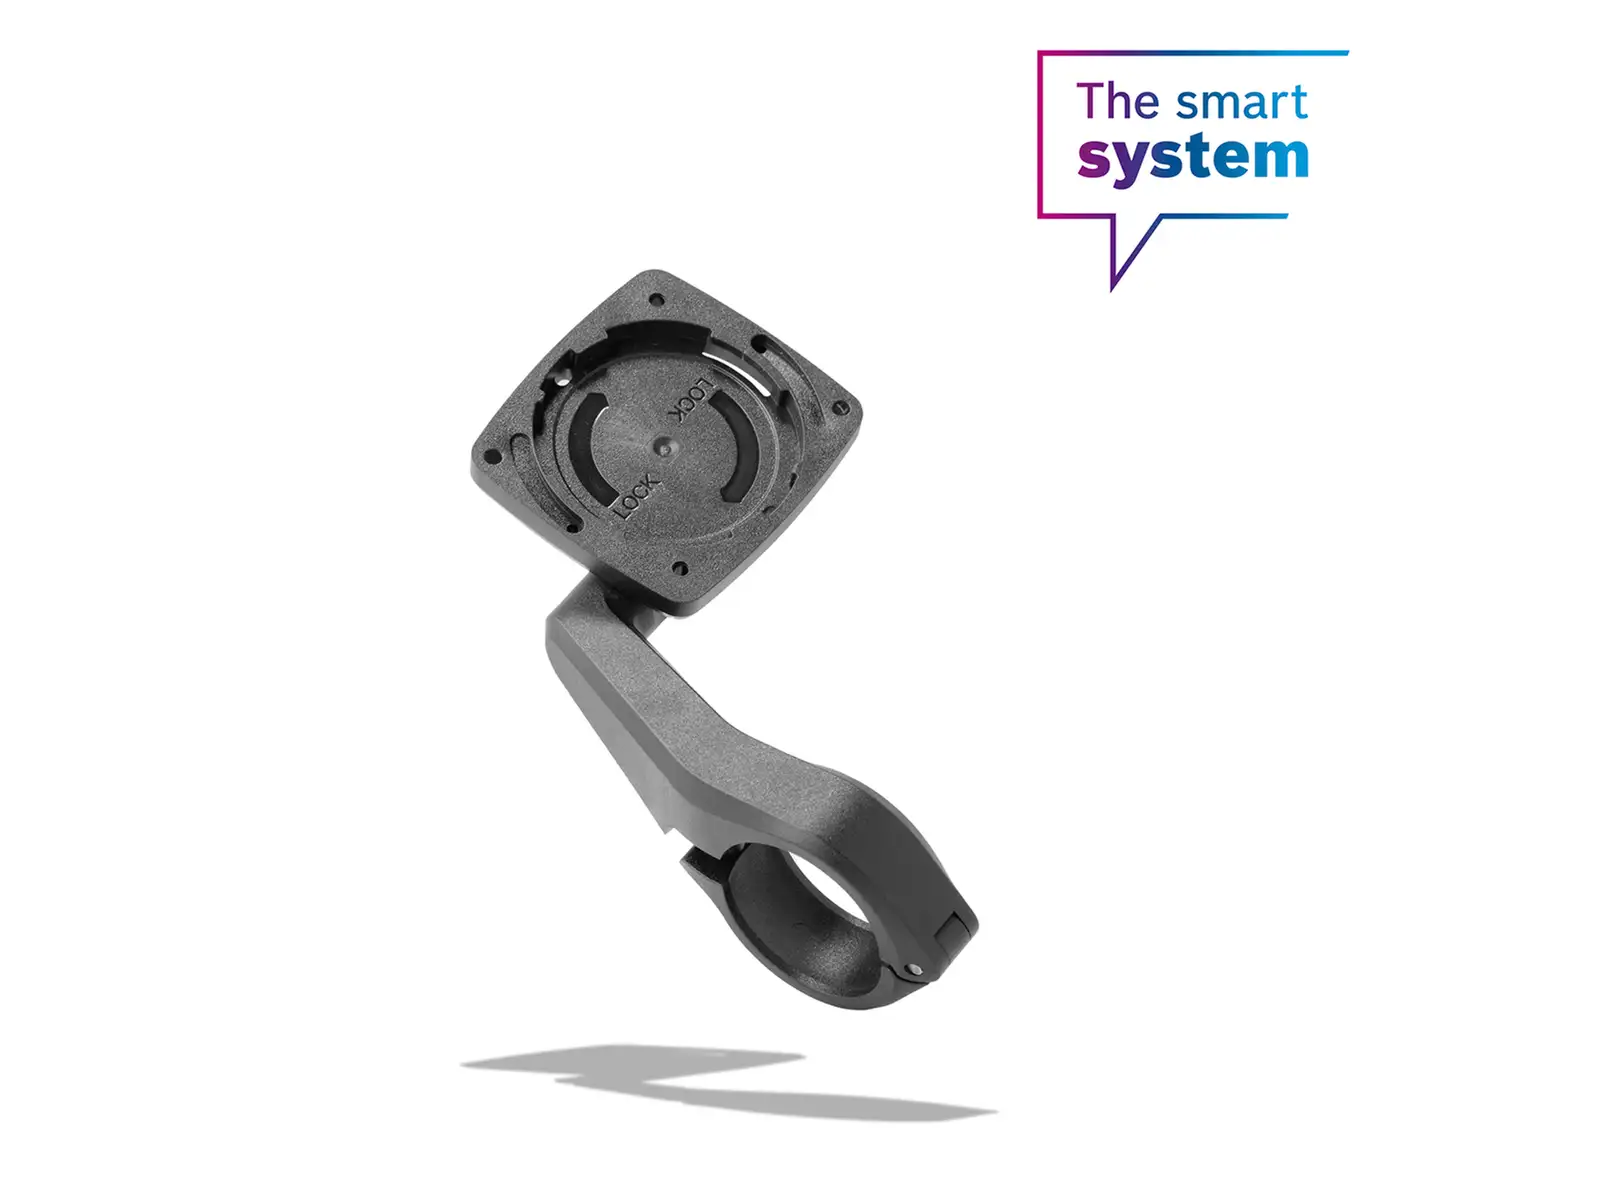 Bosch držák Intuvia 100, 25,4 mm (Smart System)